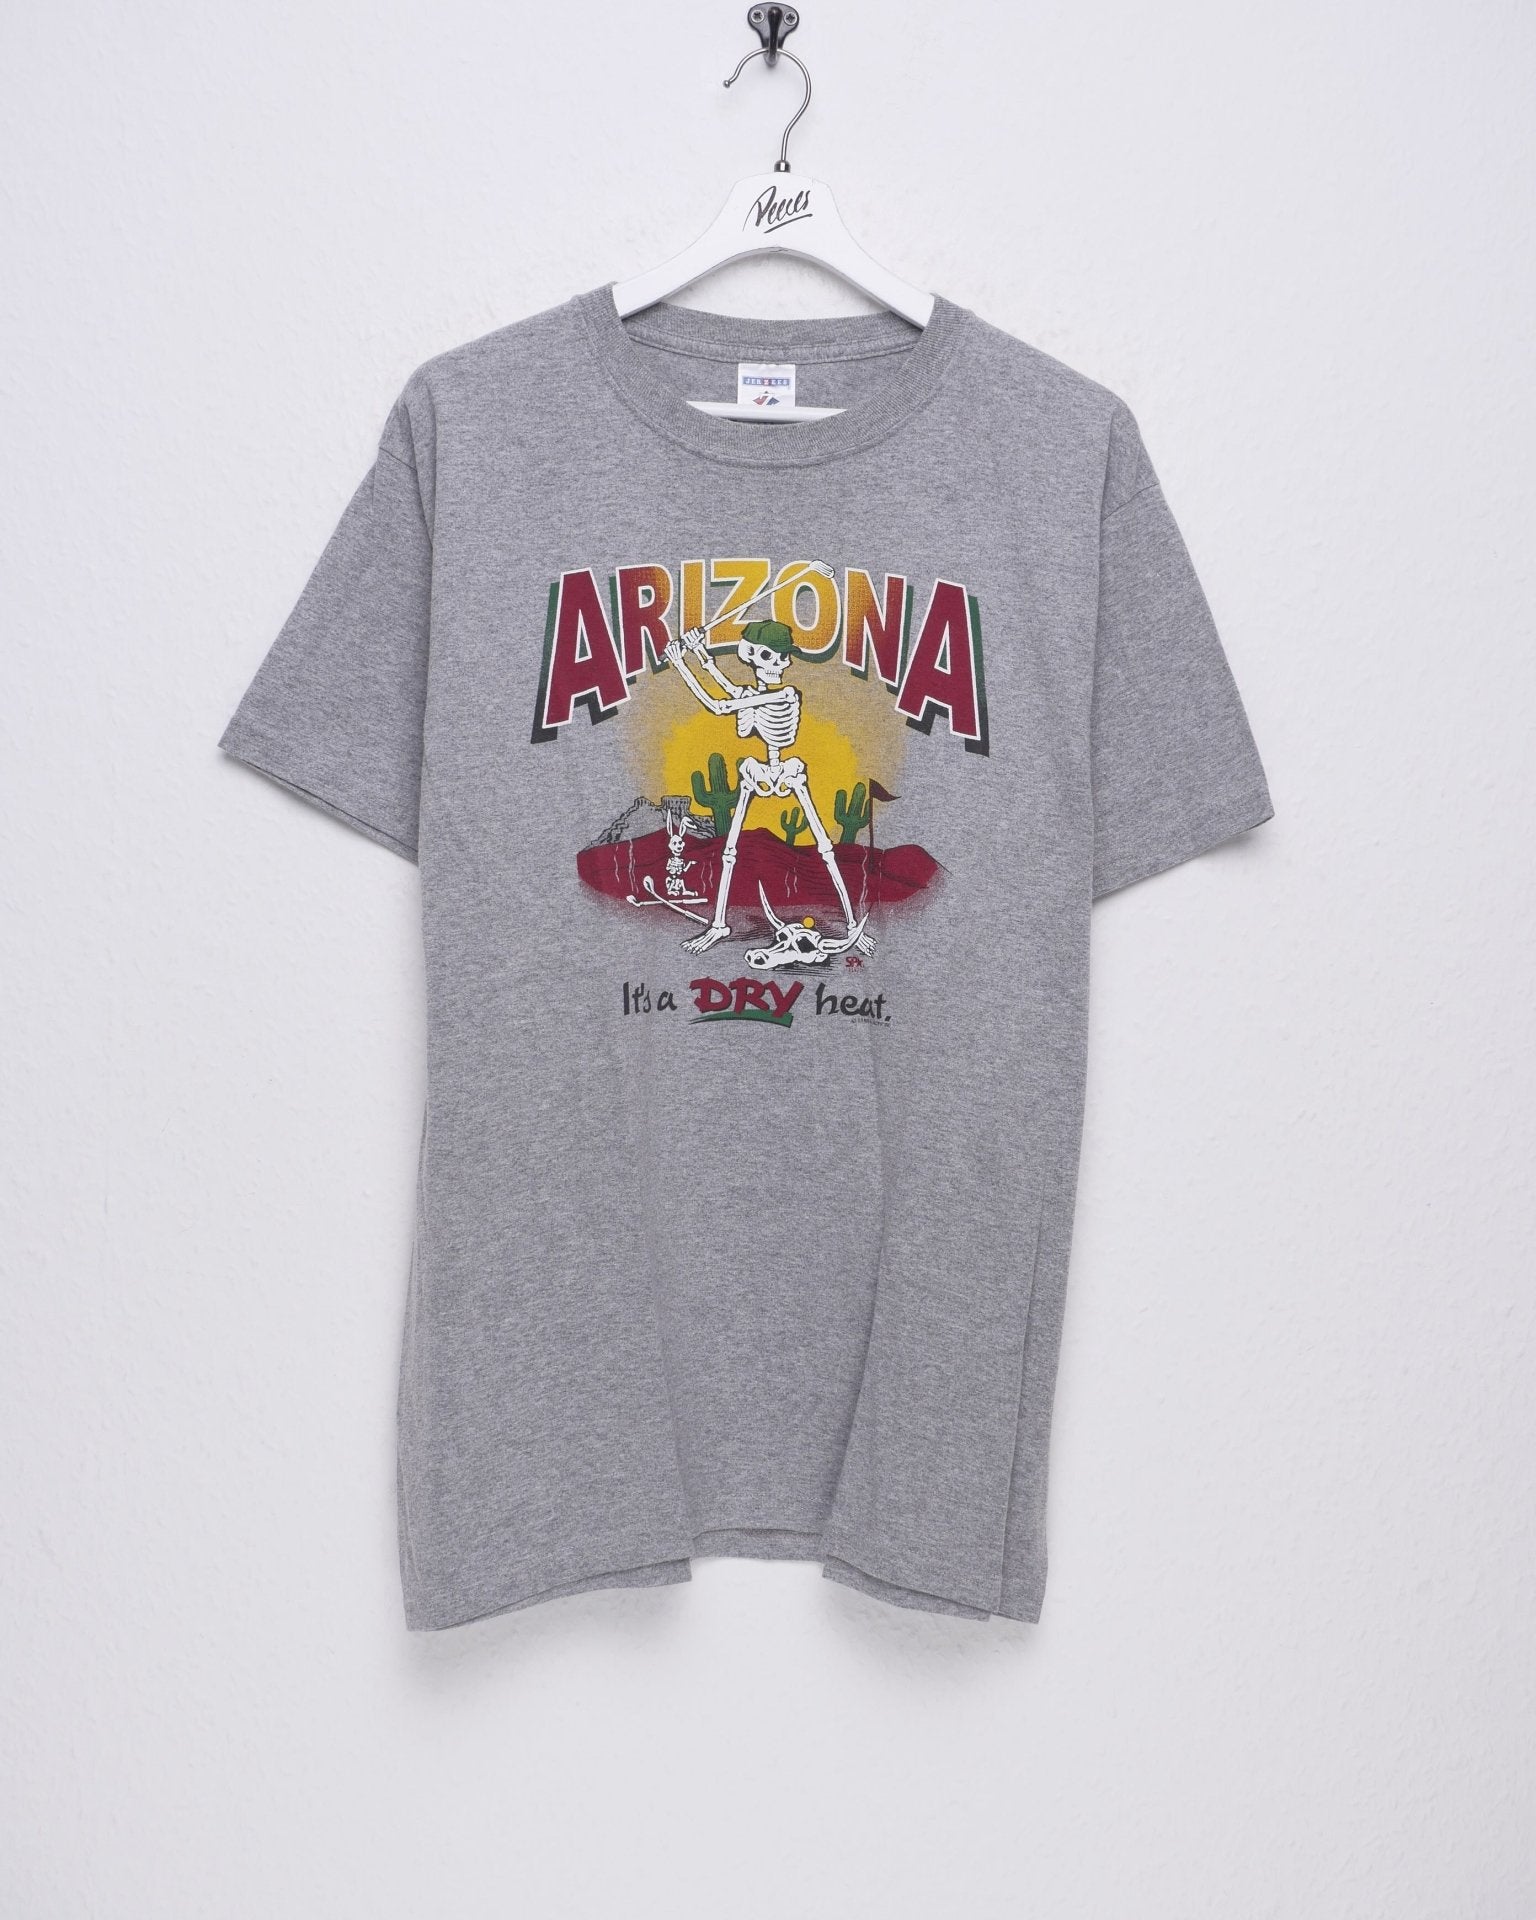 Arizona printed Graphic Vintage Shirt - Peeces